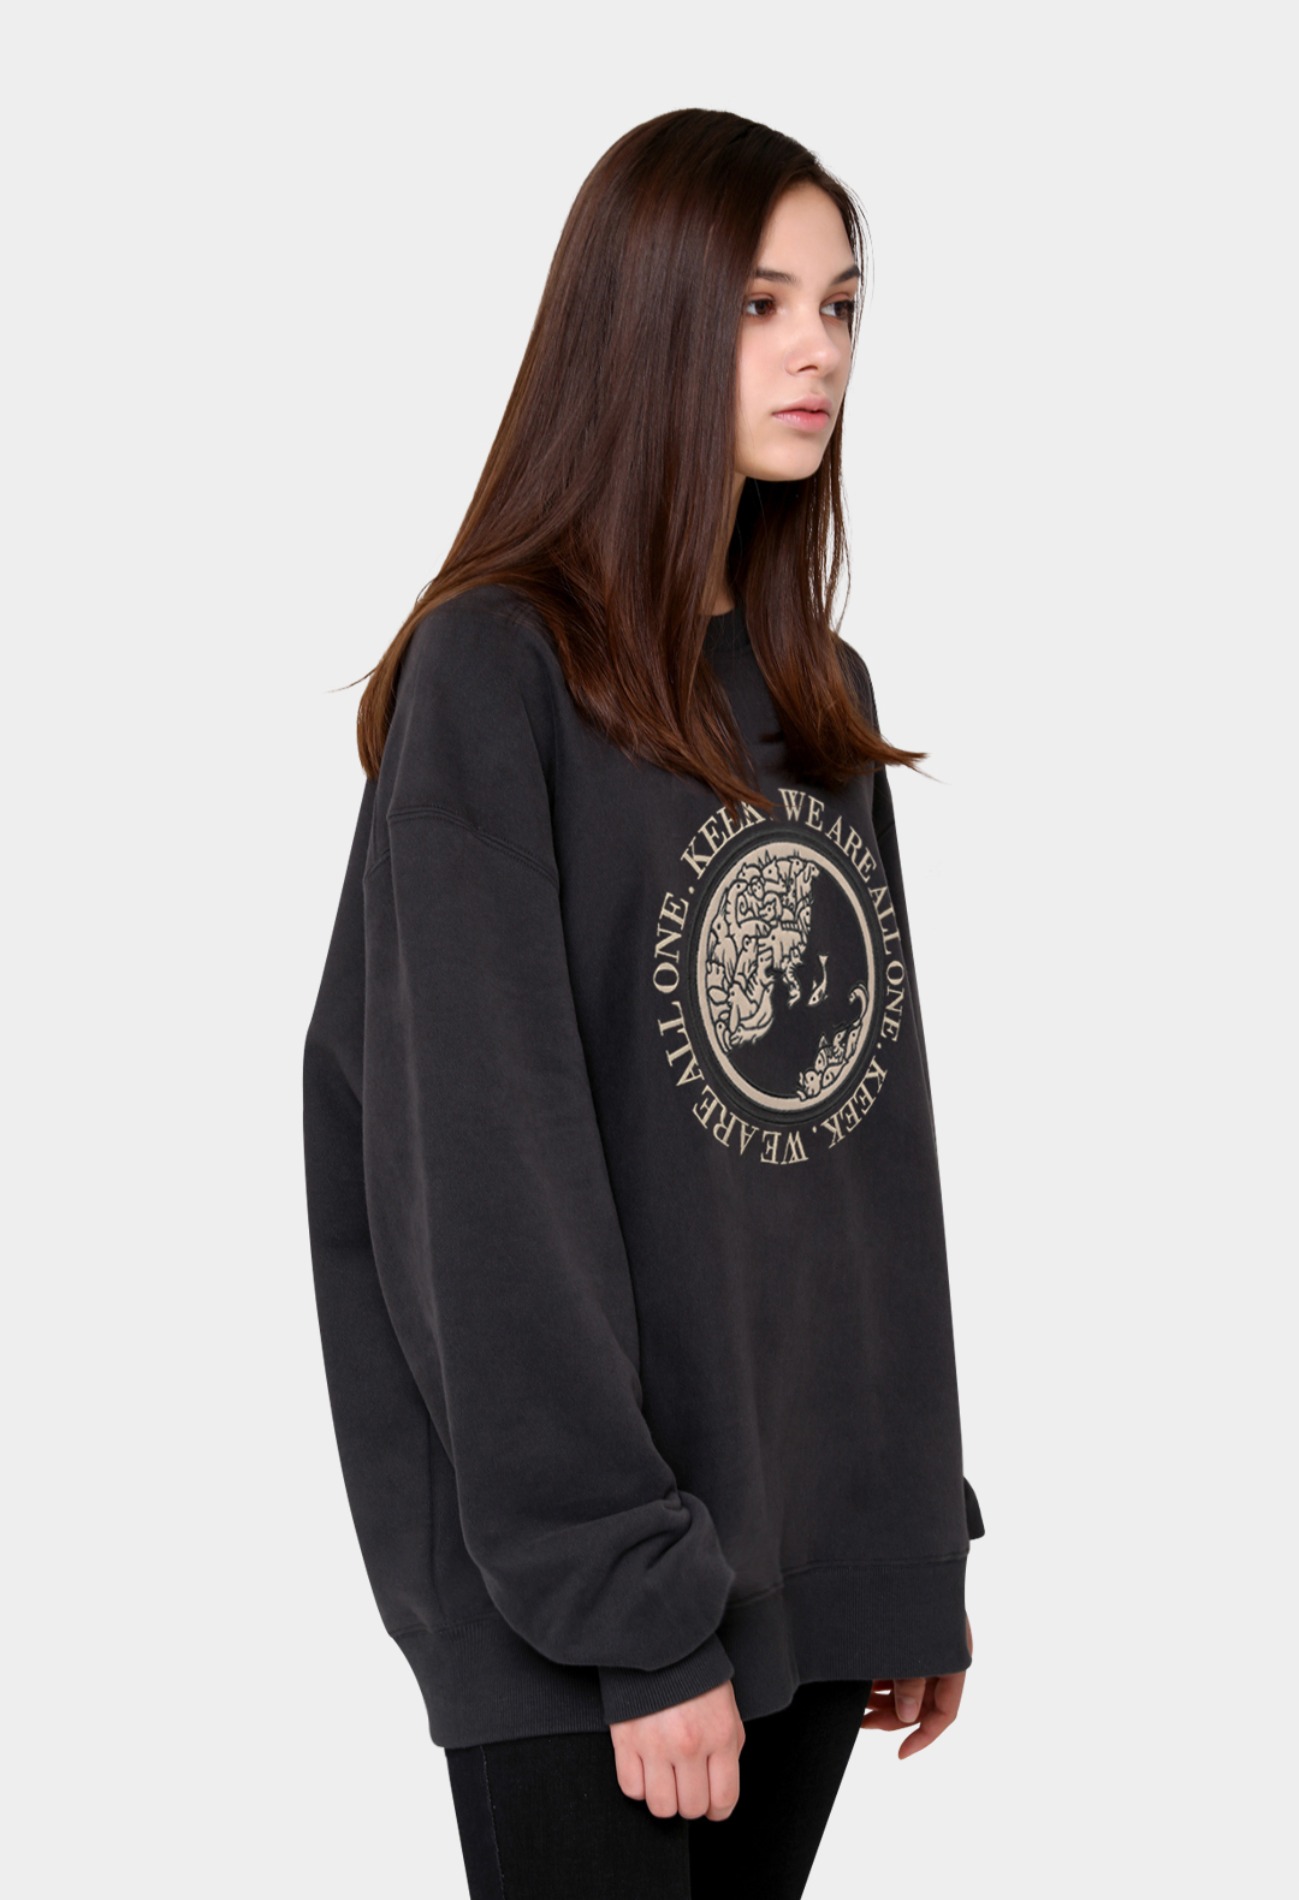 keek [Unisex] Earth Applique Sweatshirts - Charcoal 스트릿패션 유니섹스브랜드 커플시밀러룩 남자쇼핑몰 여성의류쇼핑몰 후드티 힙색